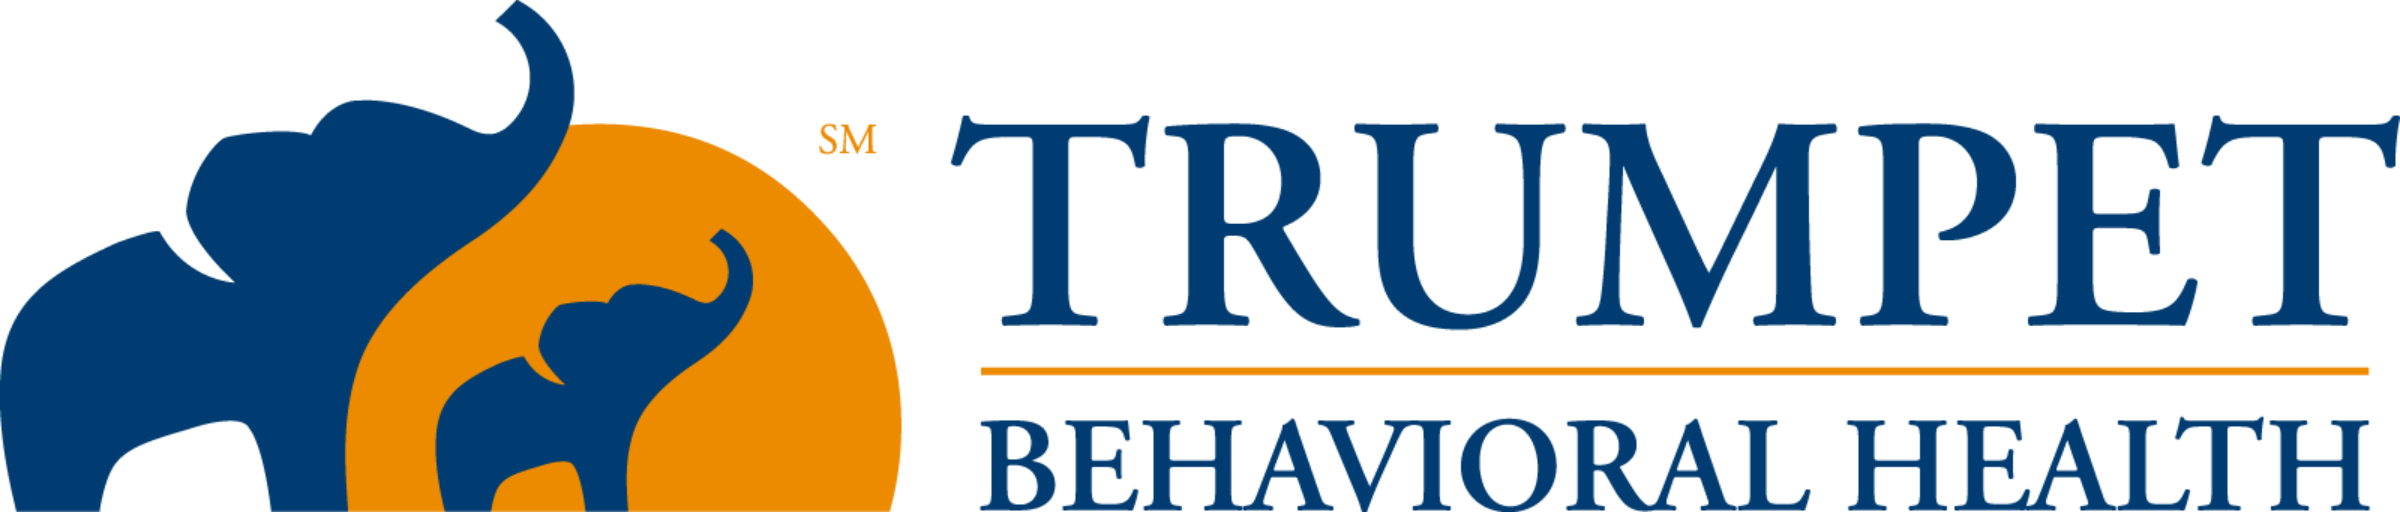 Trumpet Behavioral Health